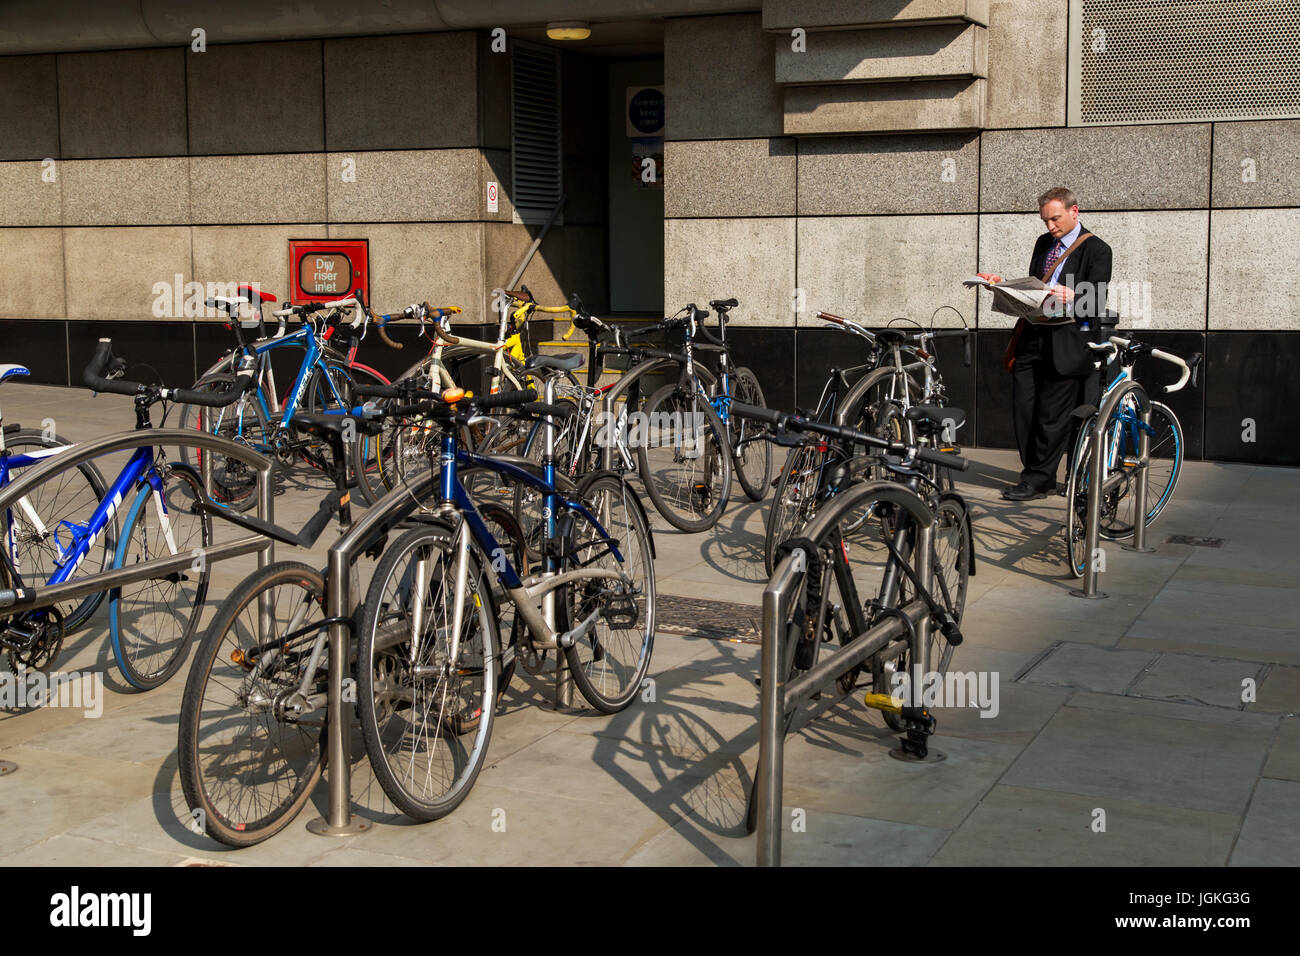 UK, London - April 08, 2015: Group of bikes in parking in London Stock Photo